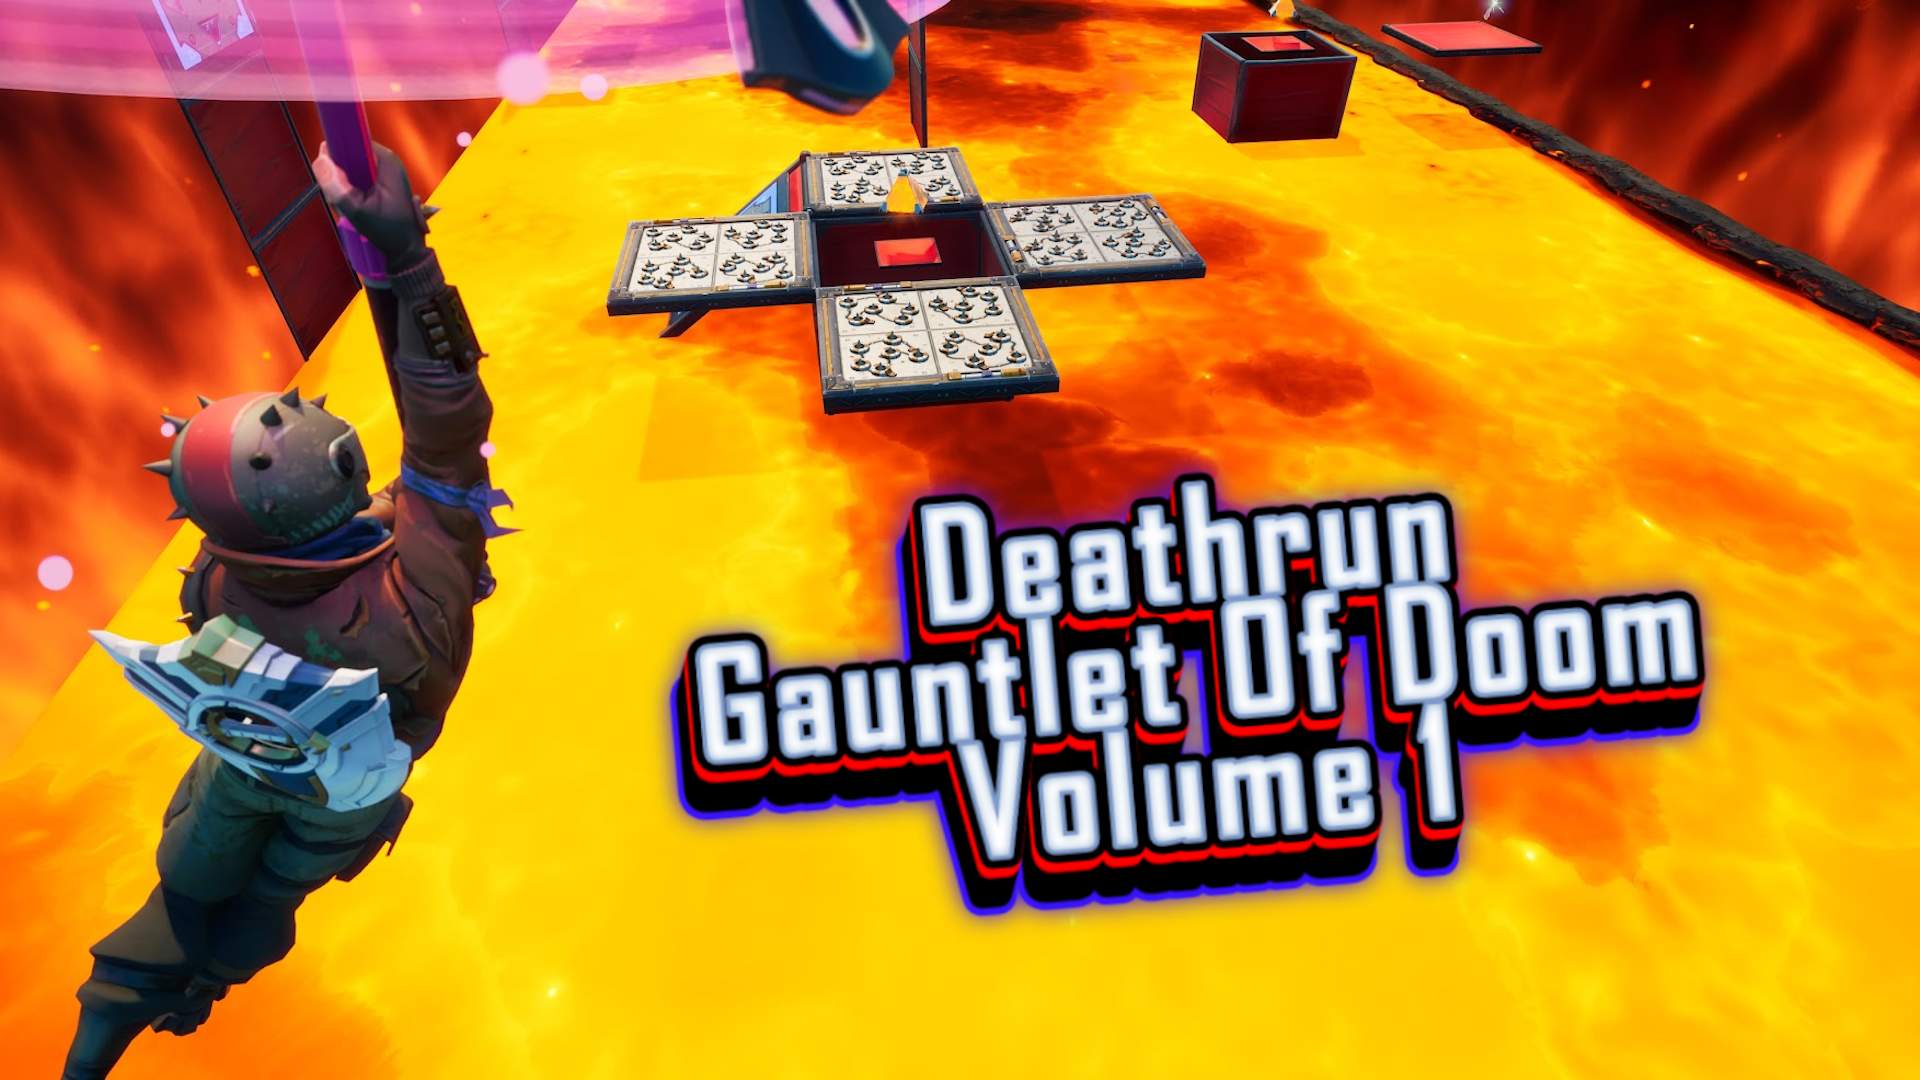 Deathrun Gauntlet Of Doom Volume 1